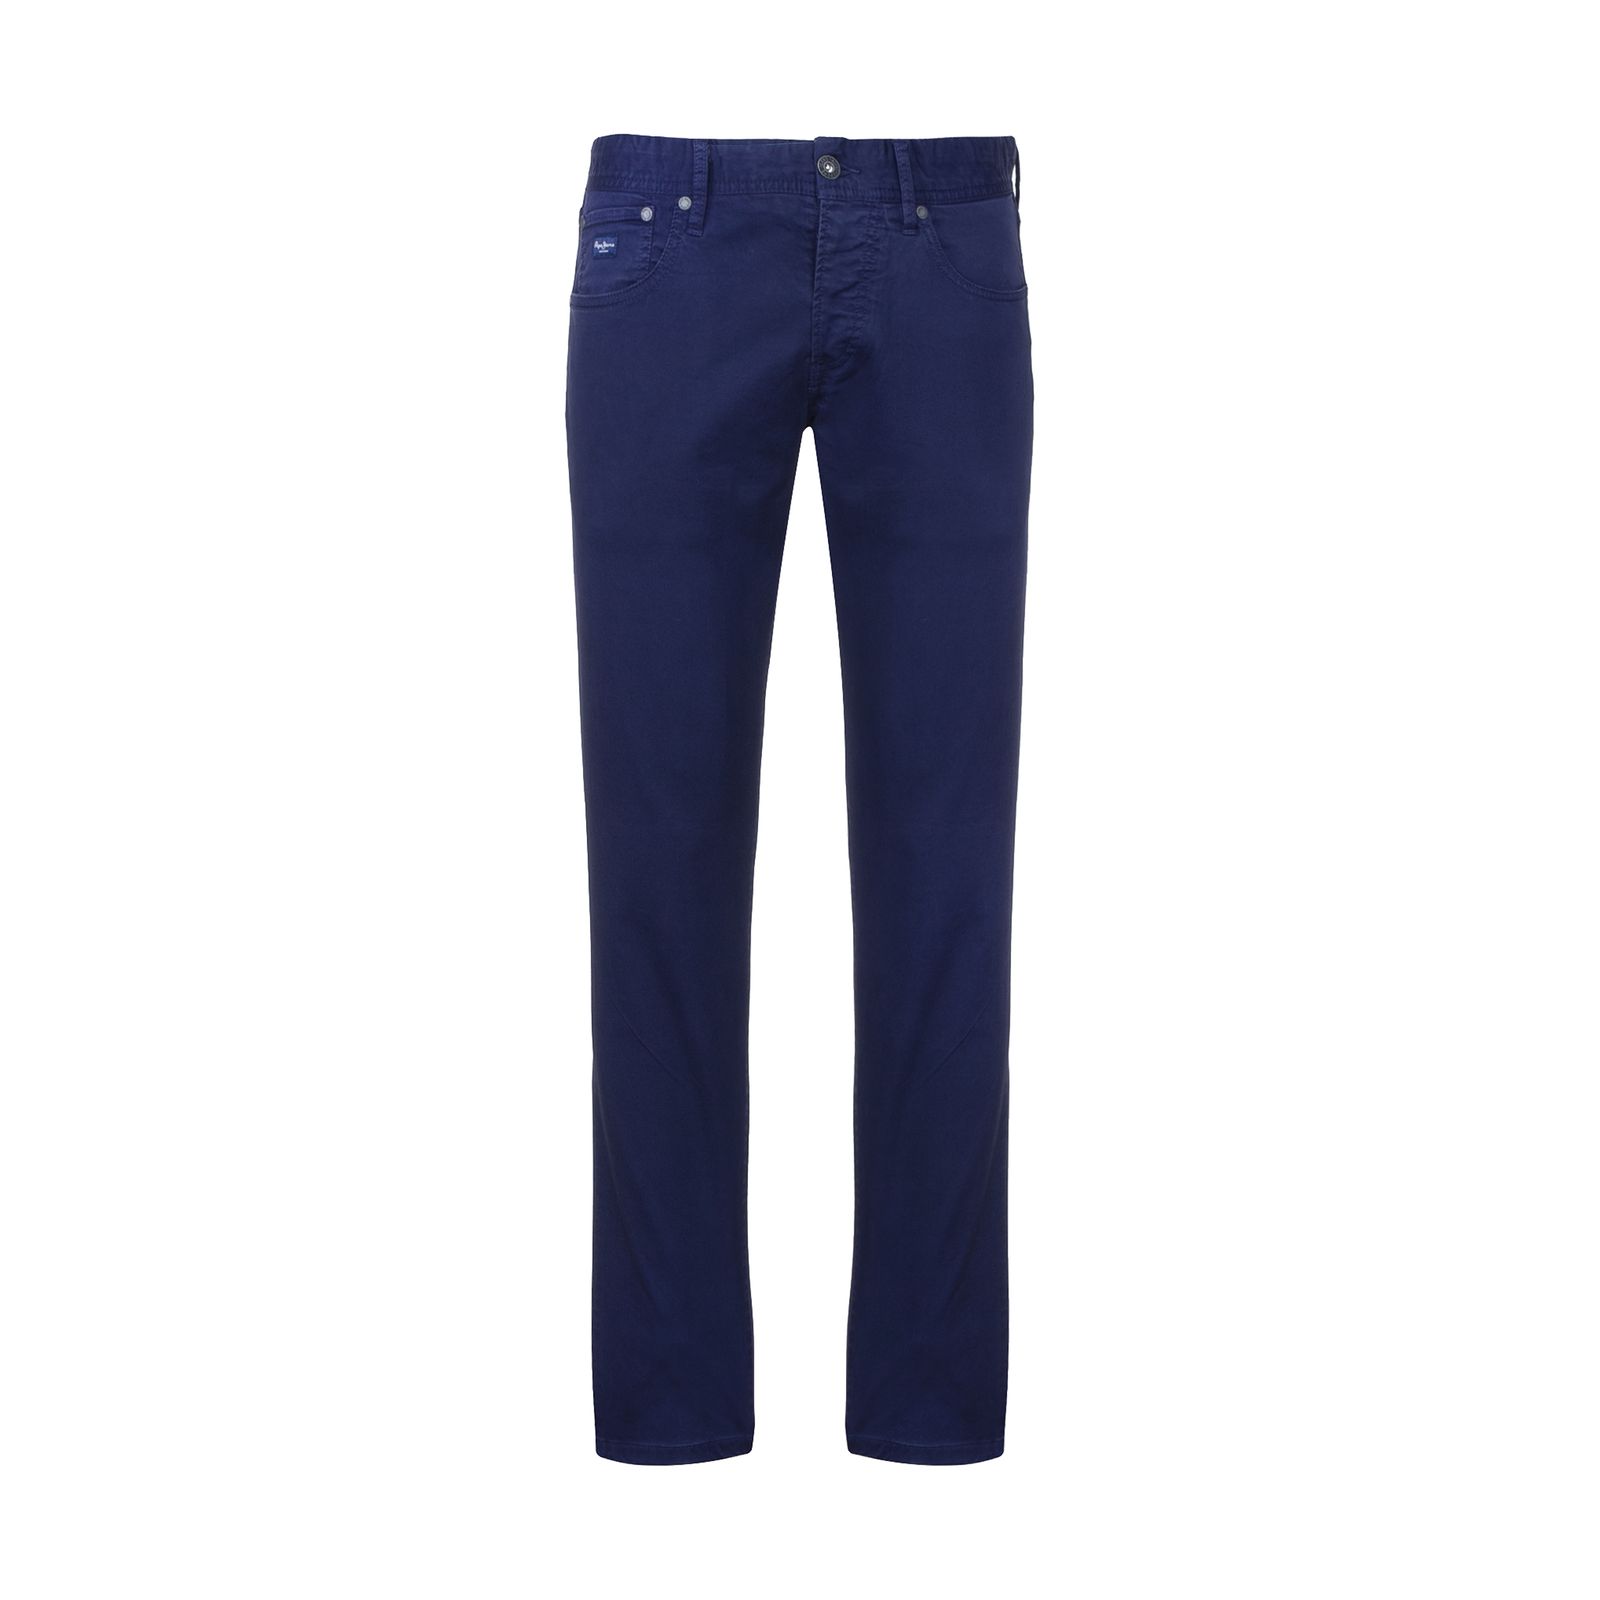 شلوار مردانه پپه جینز مدل PM210608C692 - آبي - 1